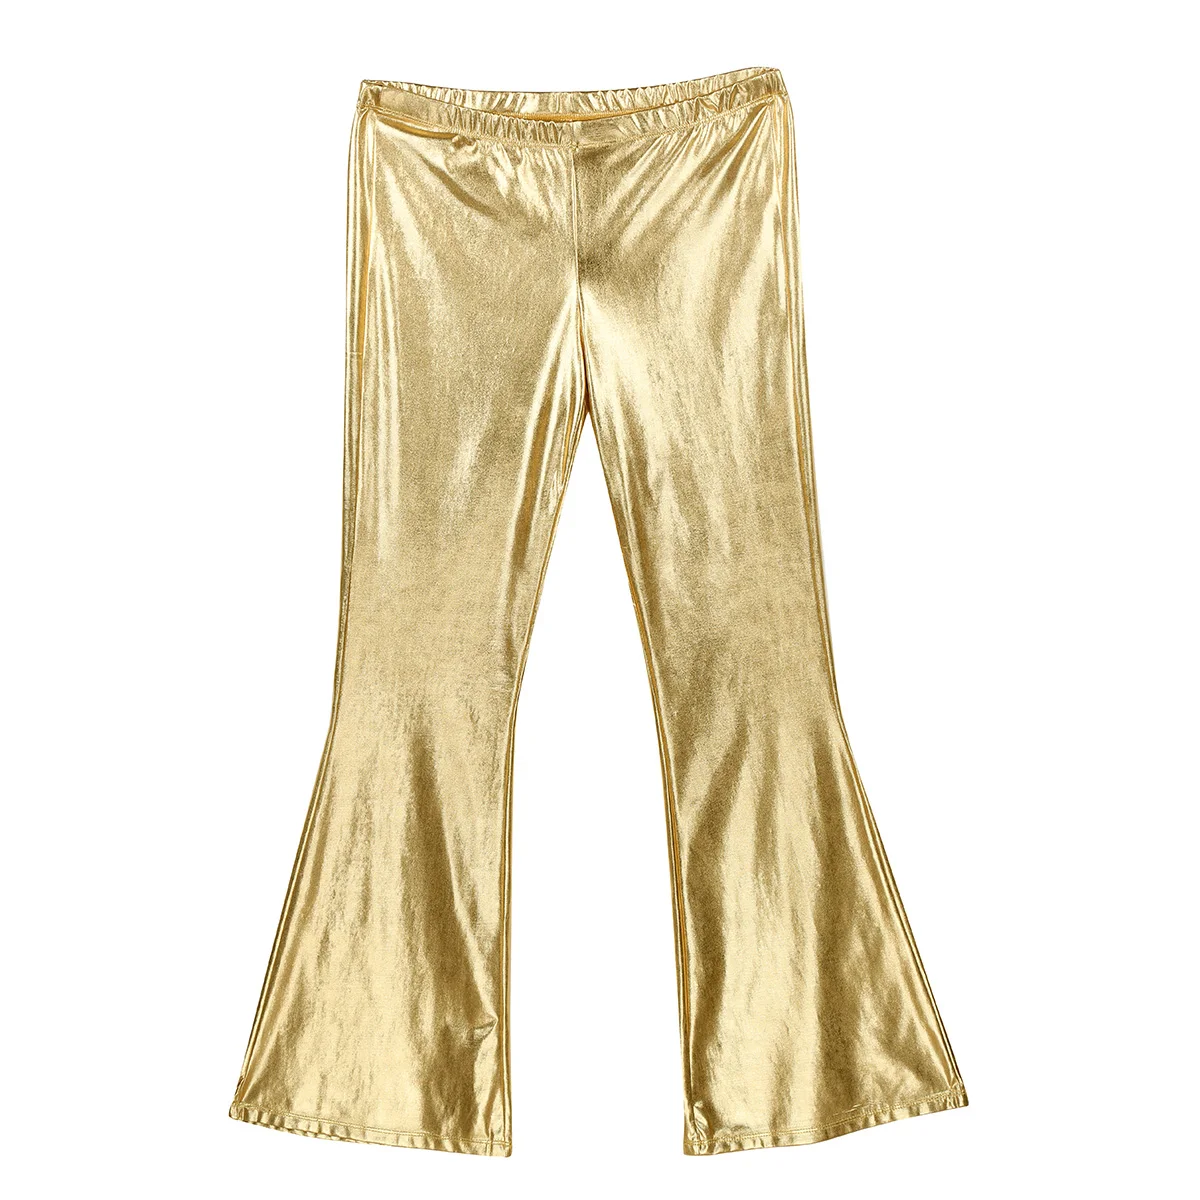 zdhoor Mens 70s Retro Disco Bell Bottom Flare Pants Metallic Shiny Legging Tights Long Trousers 